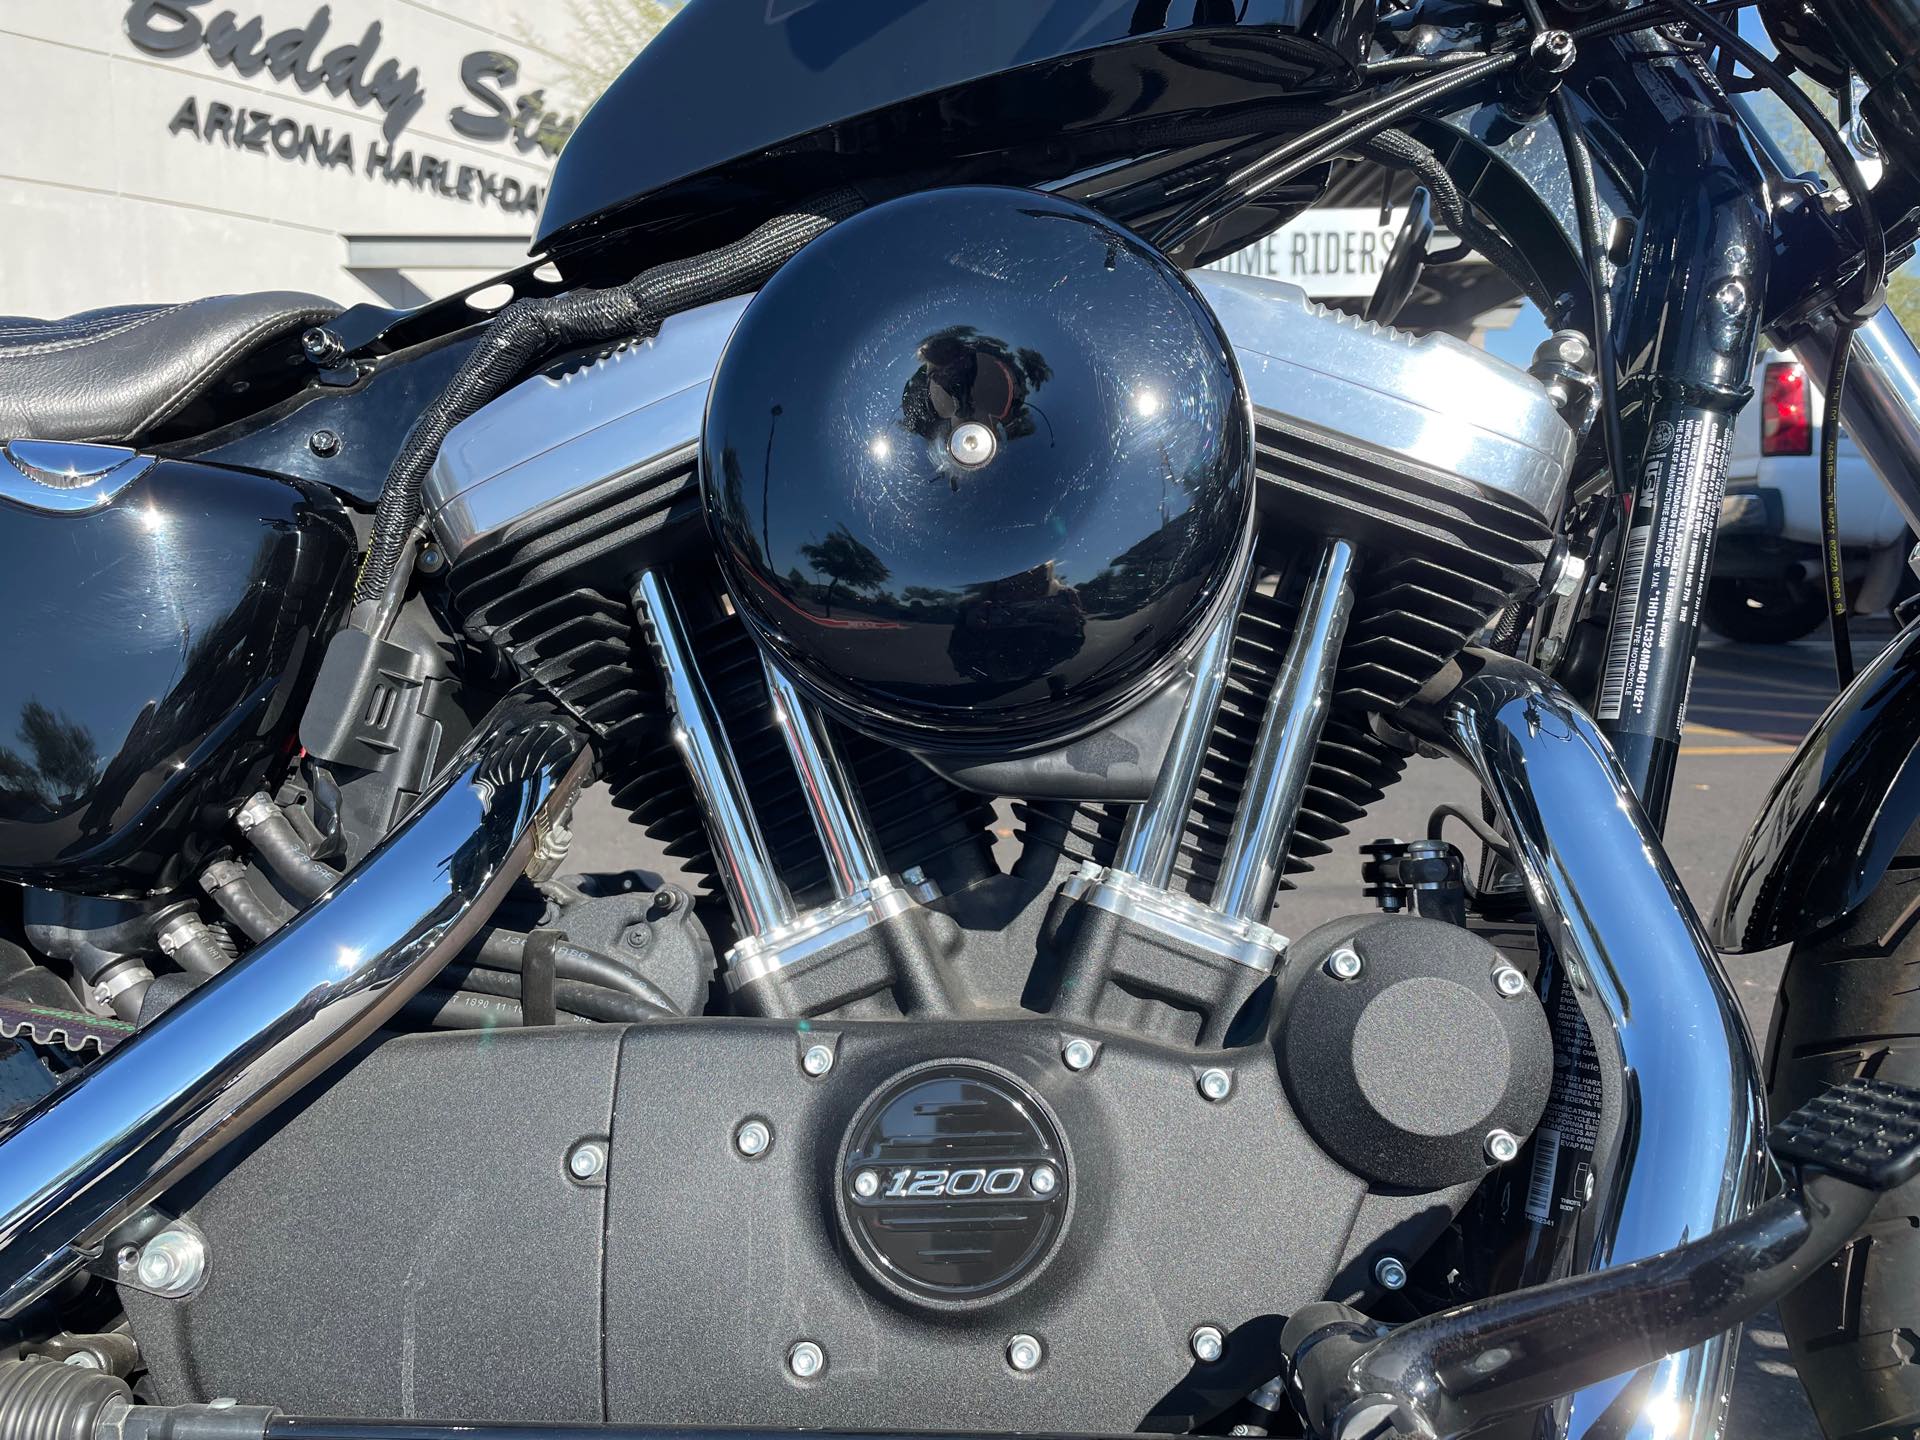 2021 Harley-Davidson Cruiser XL 1200X Forty-Eight at Buddy Stubbs Arizona Harley-Davidson